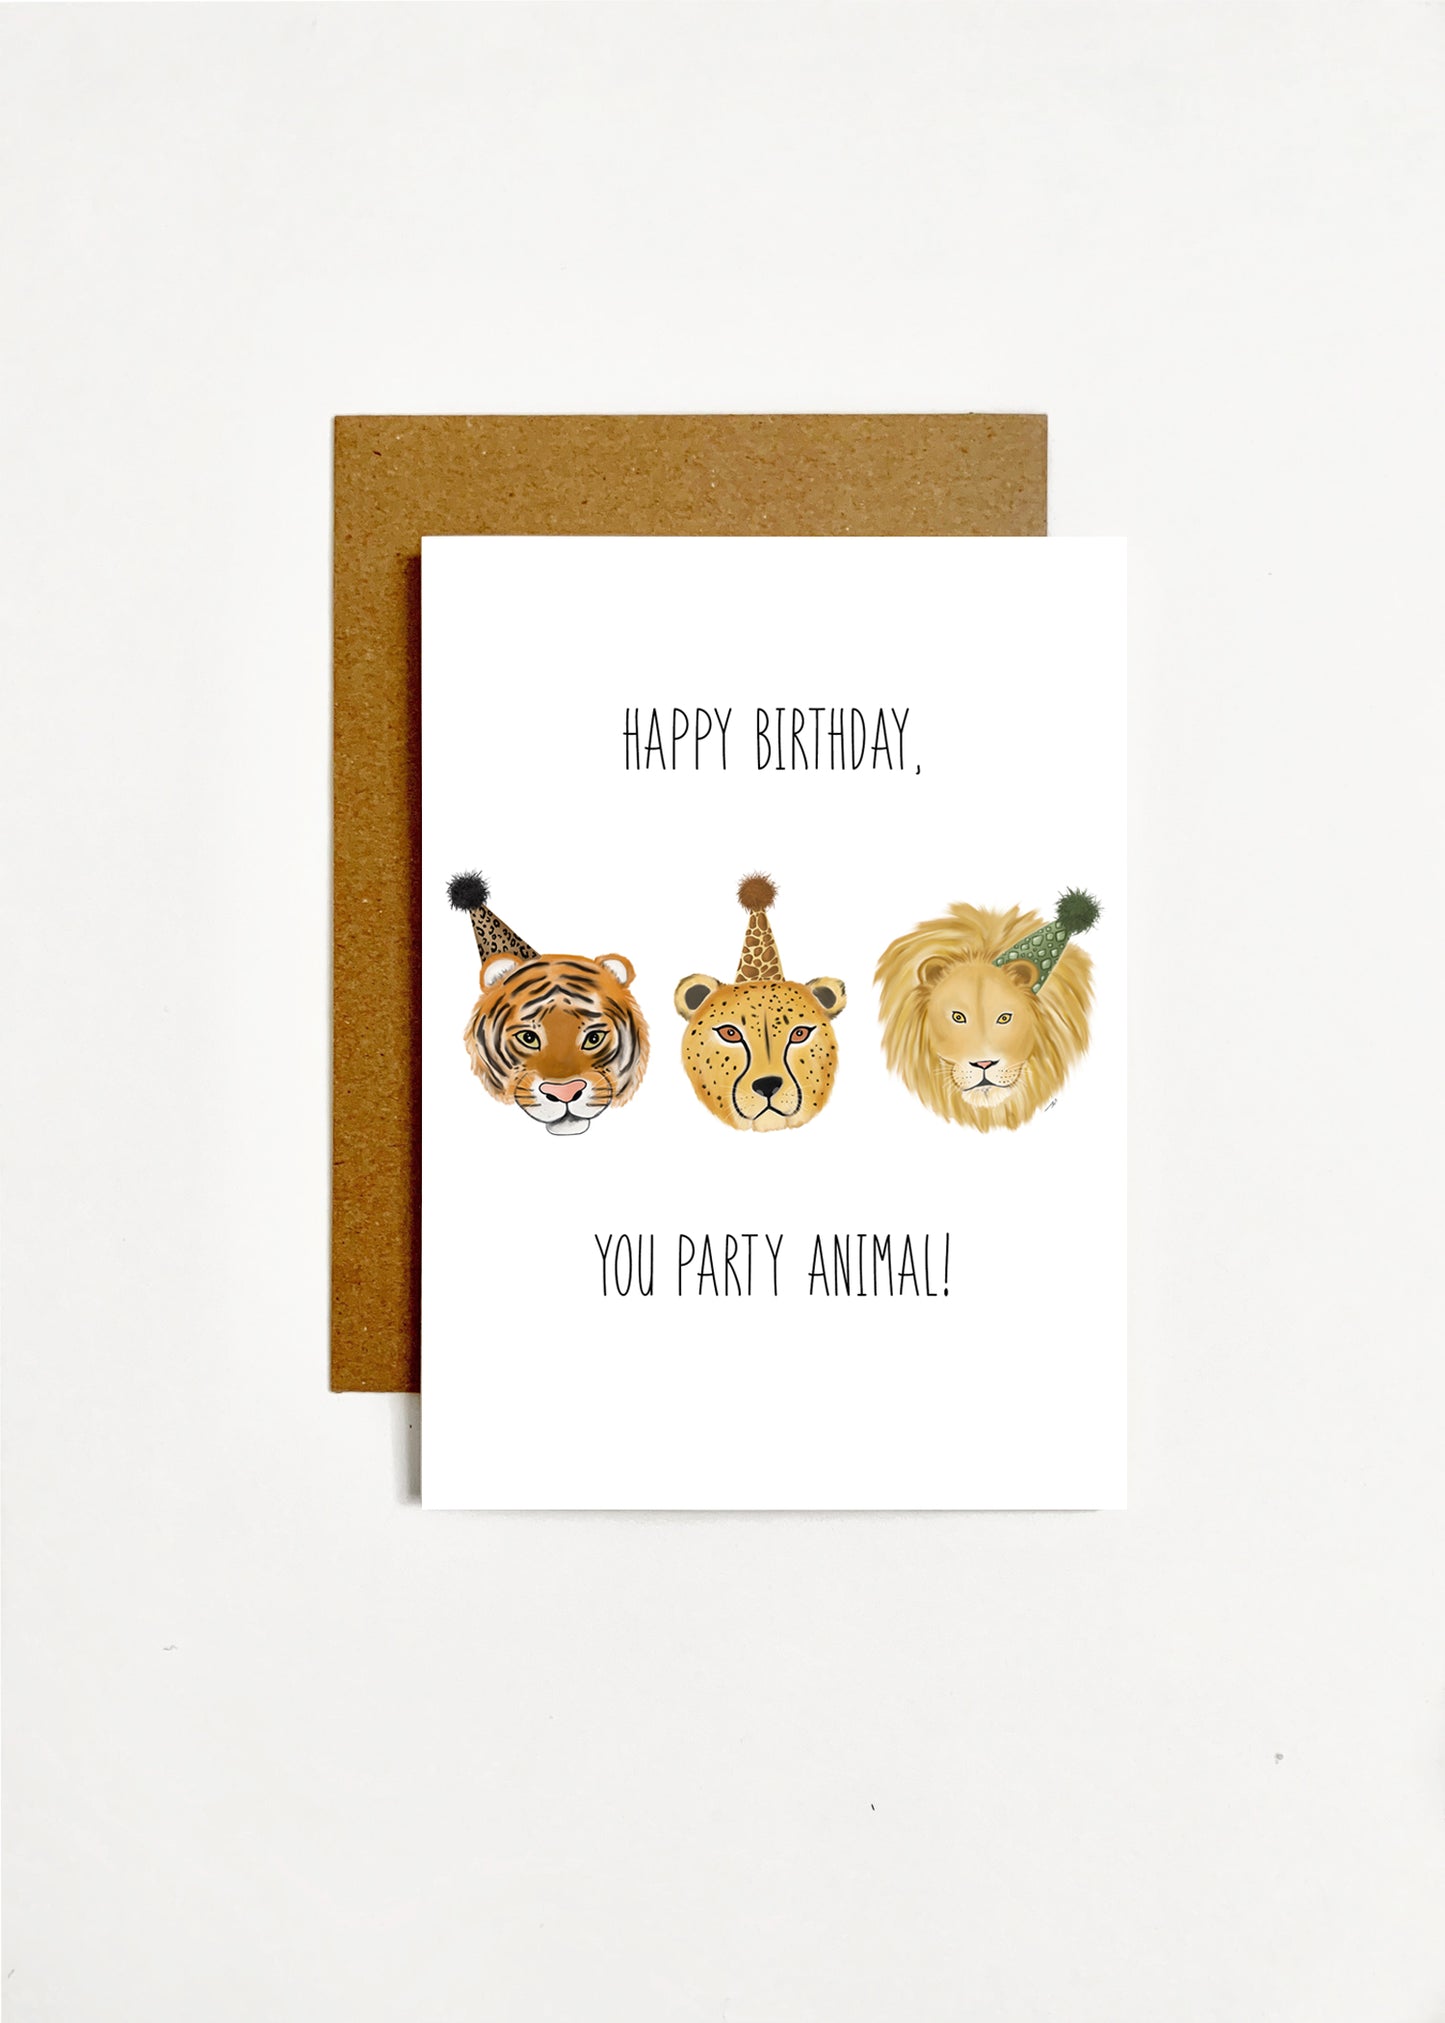 Happy Birthday, You Party Animal!